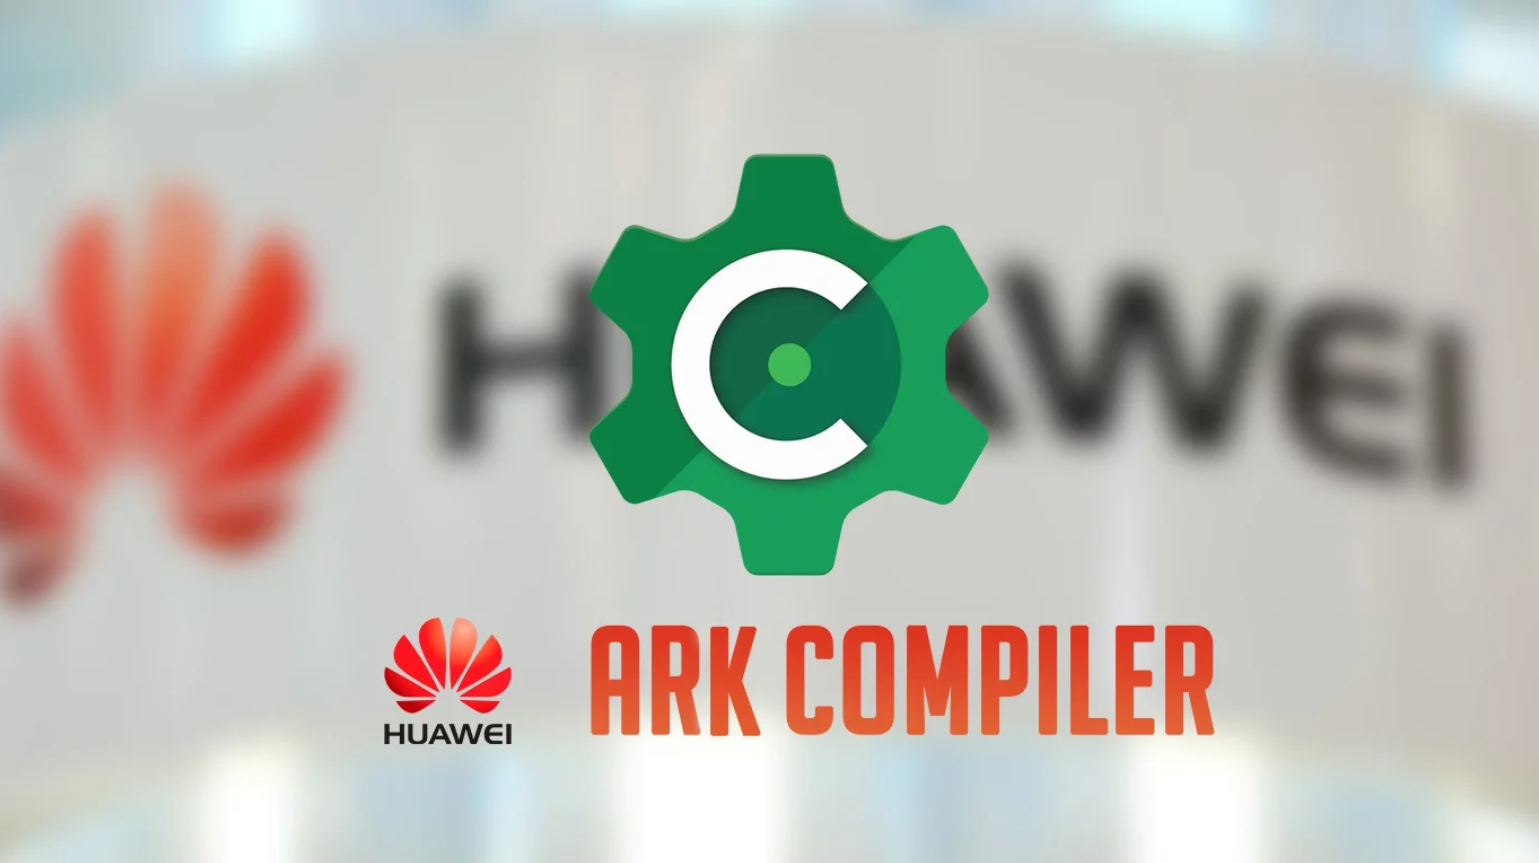 Ark compiler